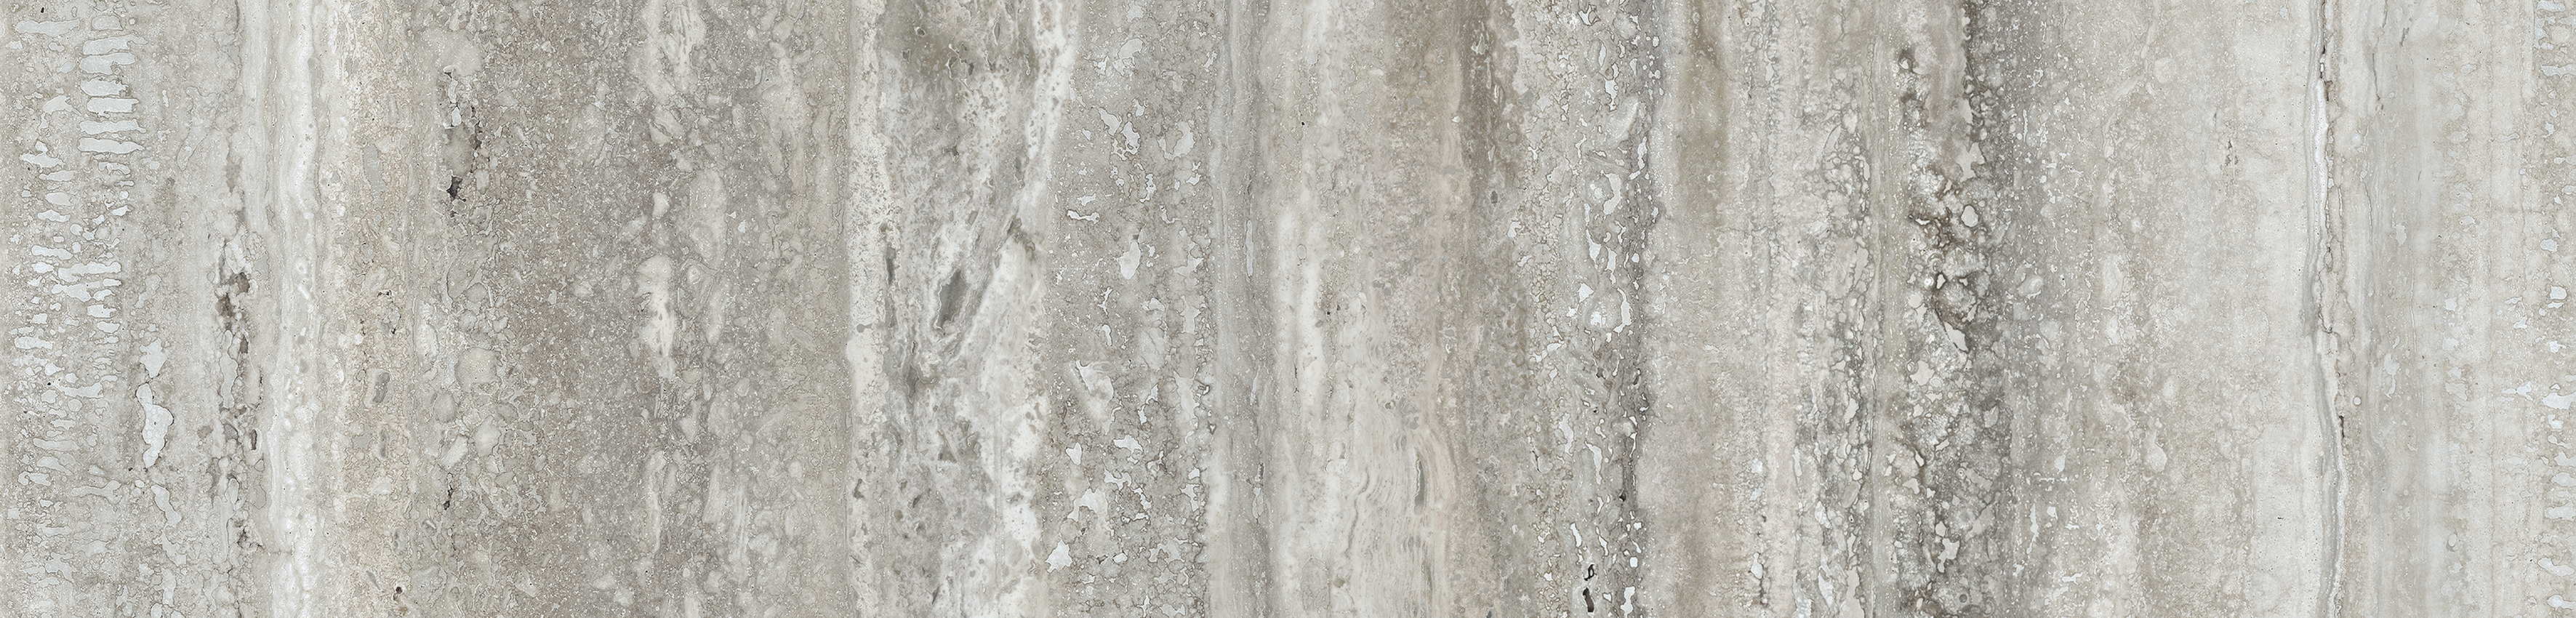 travertino instrata pattern glazed porcelain bullnose molding from la marca anatolia collection distributed by surface group international honed finish straight edge edge 3x12 bar shape